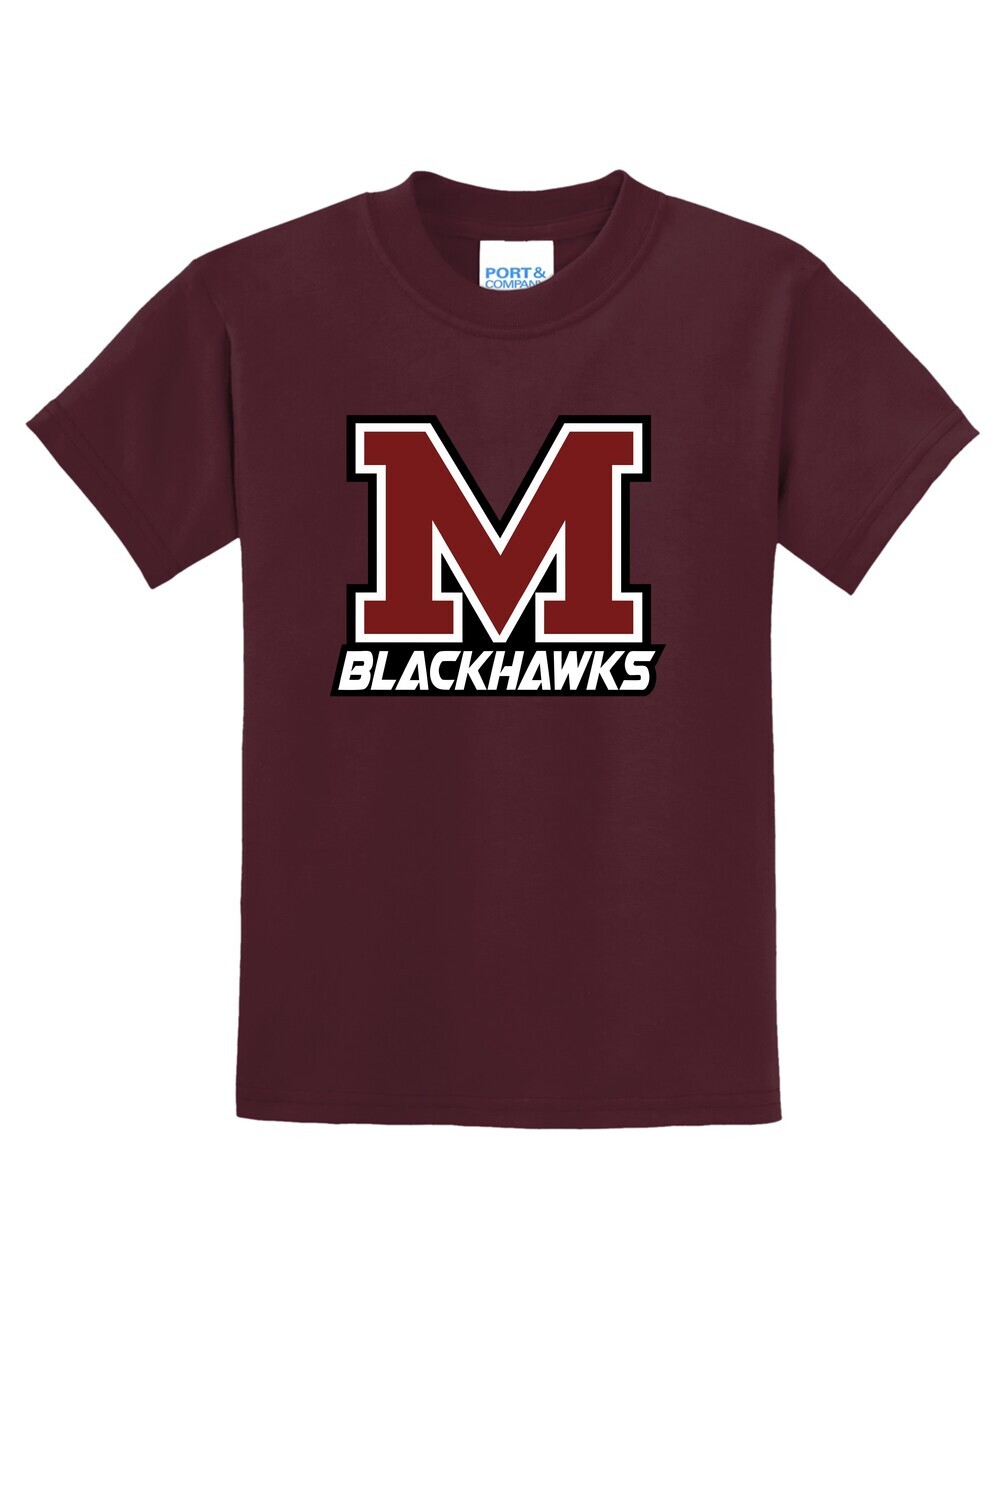 Moline Blackhawks "M" Logo 50/50 Blend Youth T-shirt